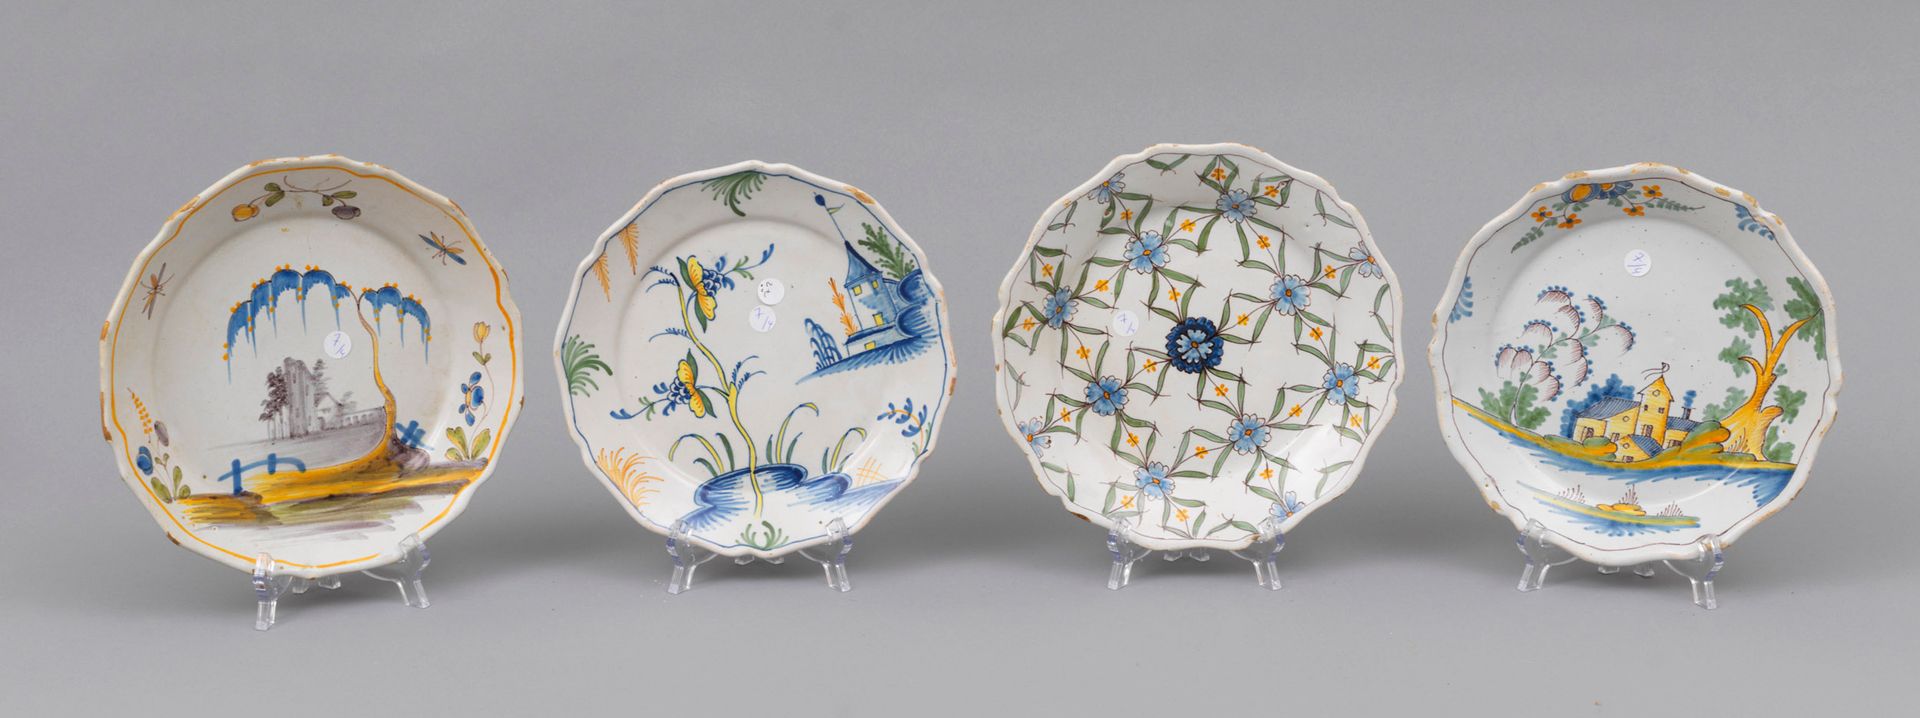 Faience Nevers 
内韦尔 

四个陶器盘子，边缘有轮廓，其中三个装饰有 "Fabriques dans des paysages"，一个盘子装饰有&hellip;